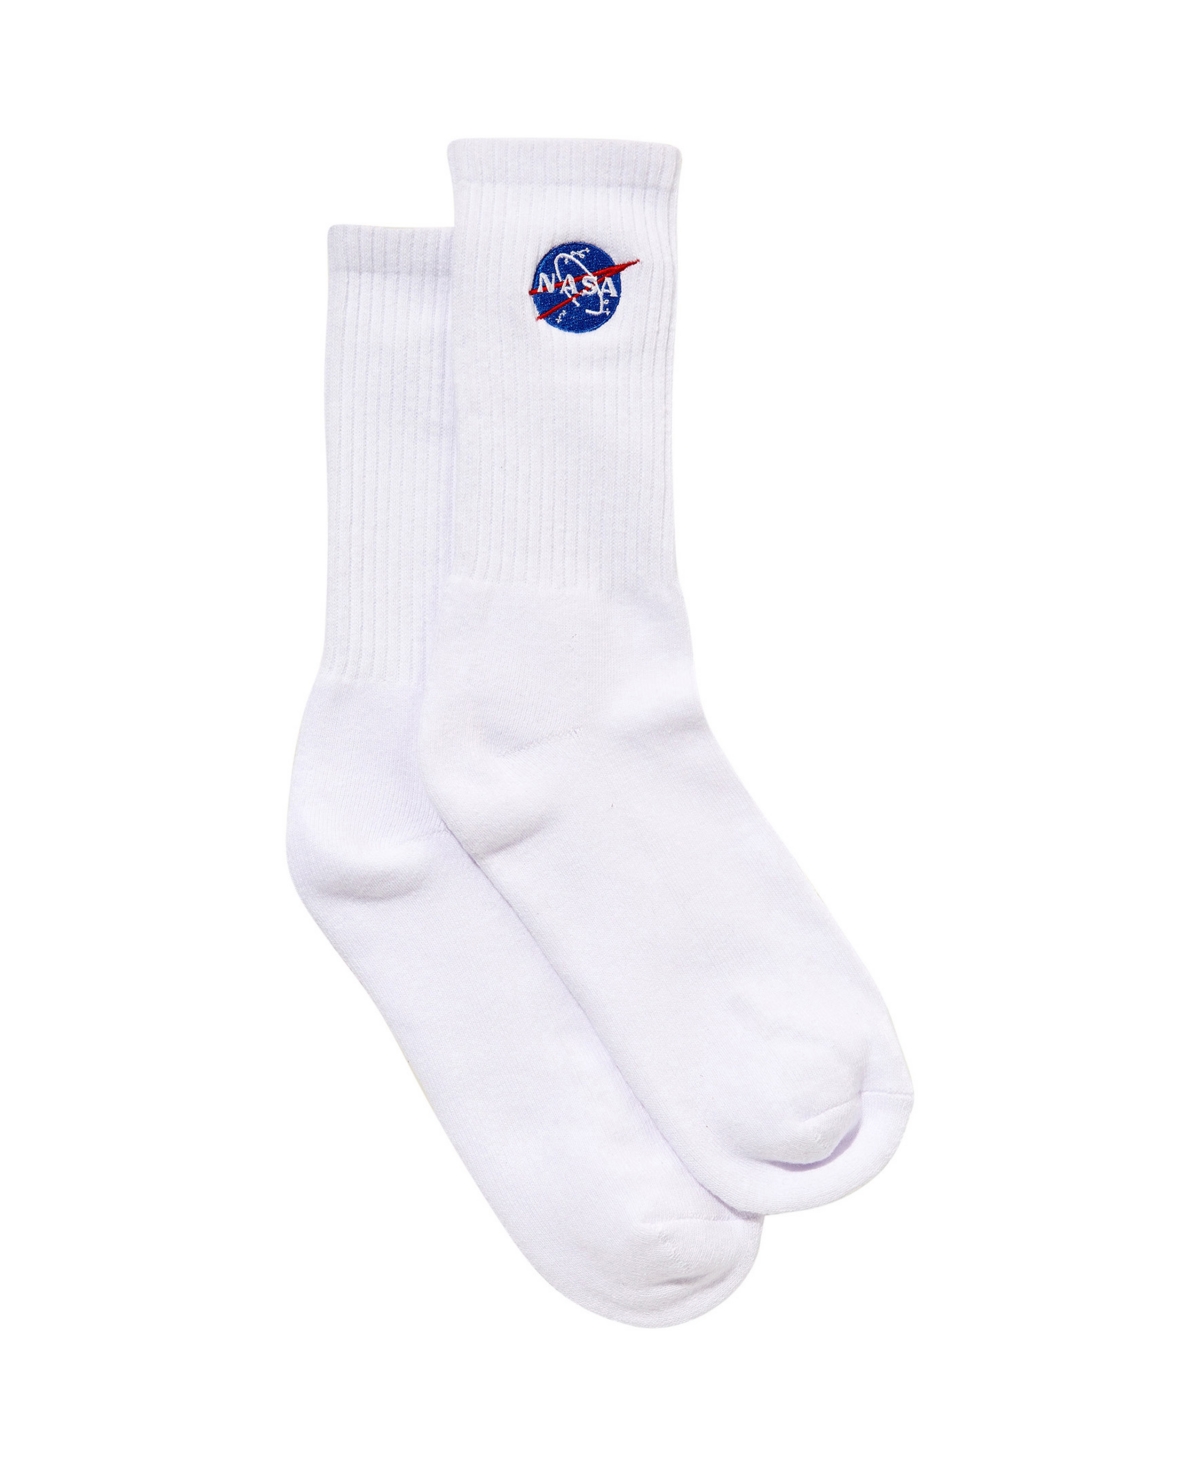 Cotton On Men's Special Edition Crew Socks In White,nasa